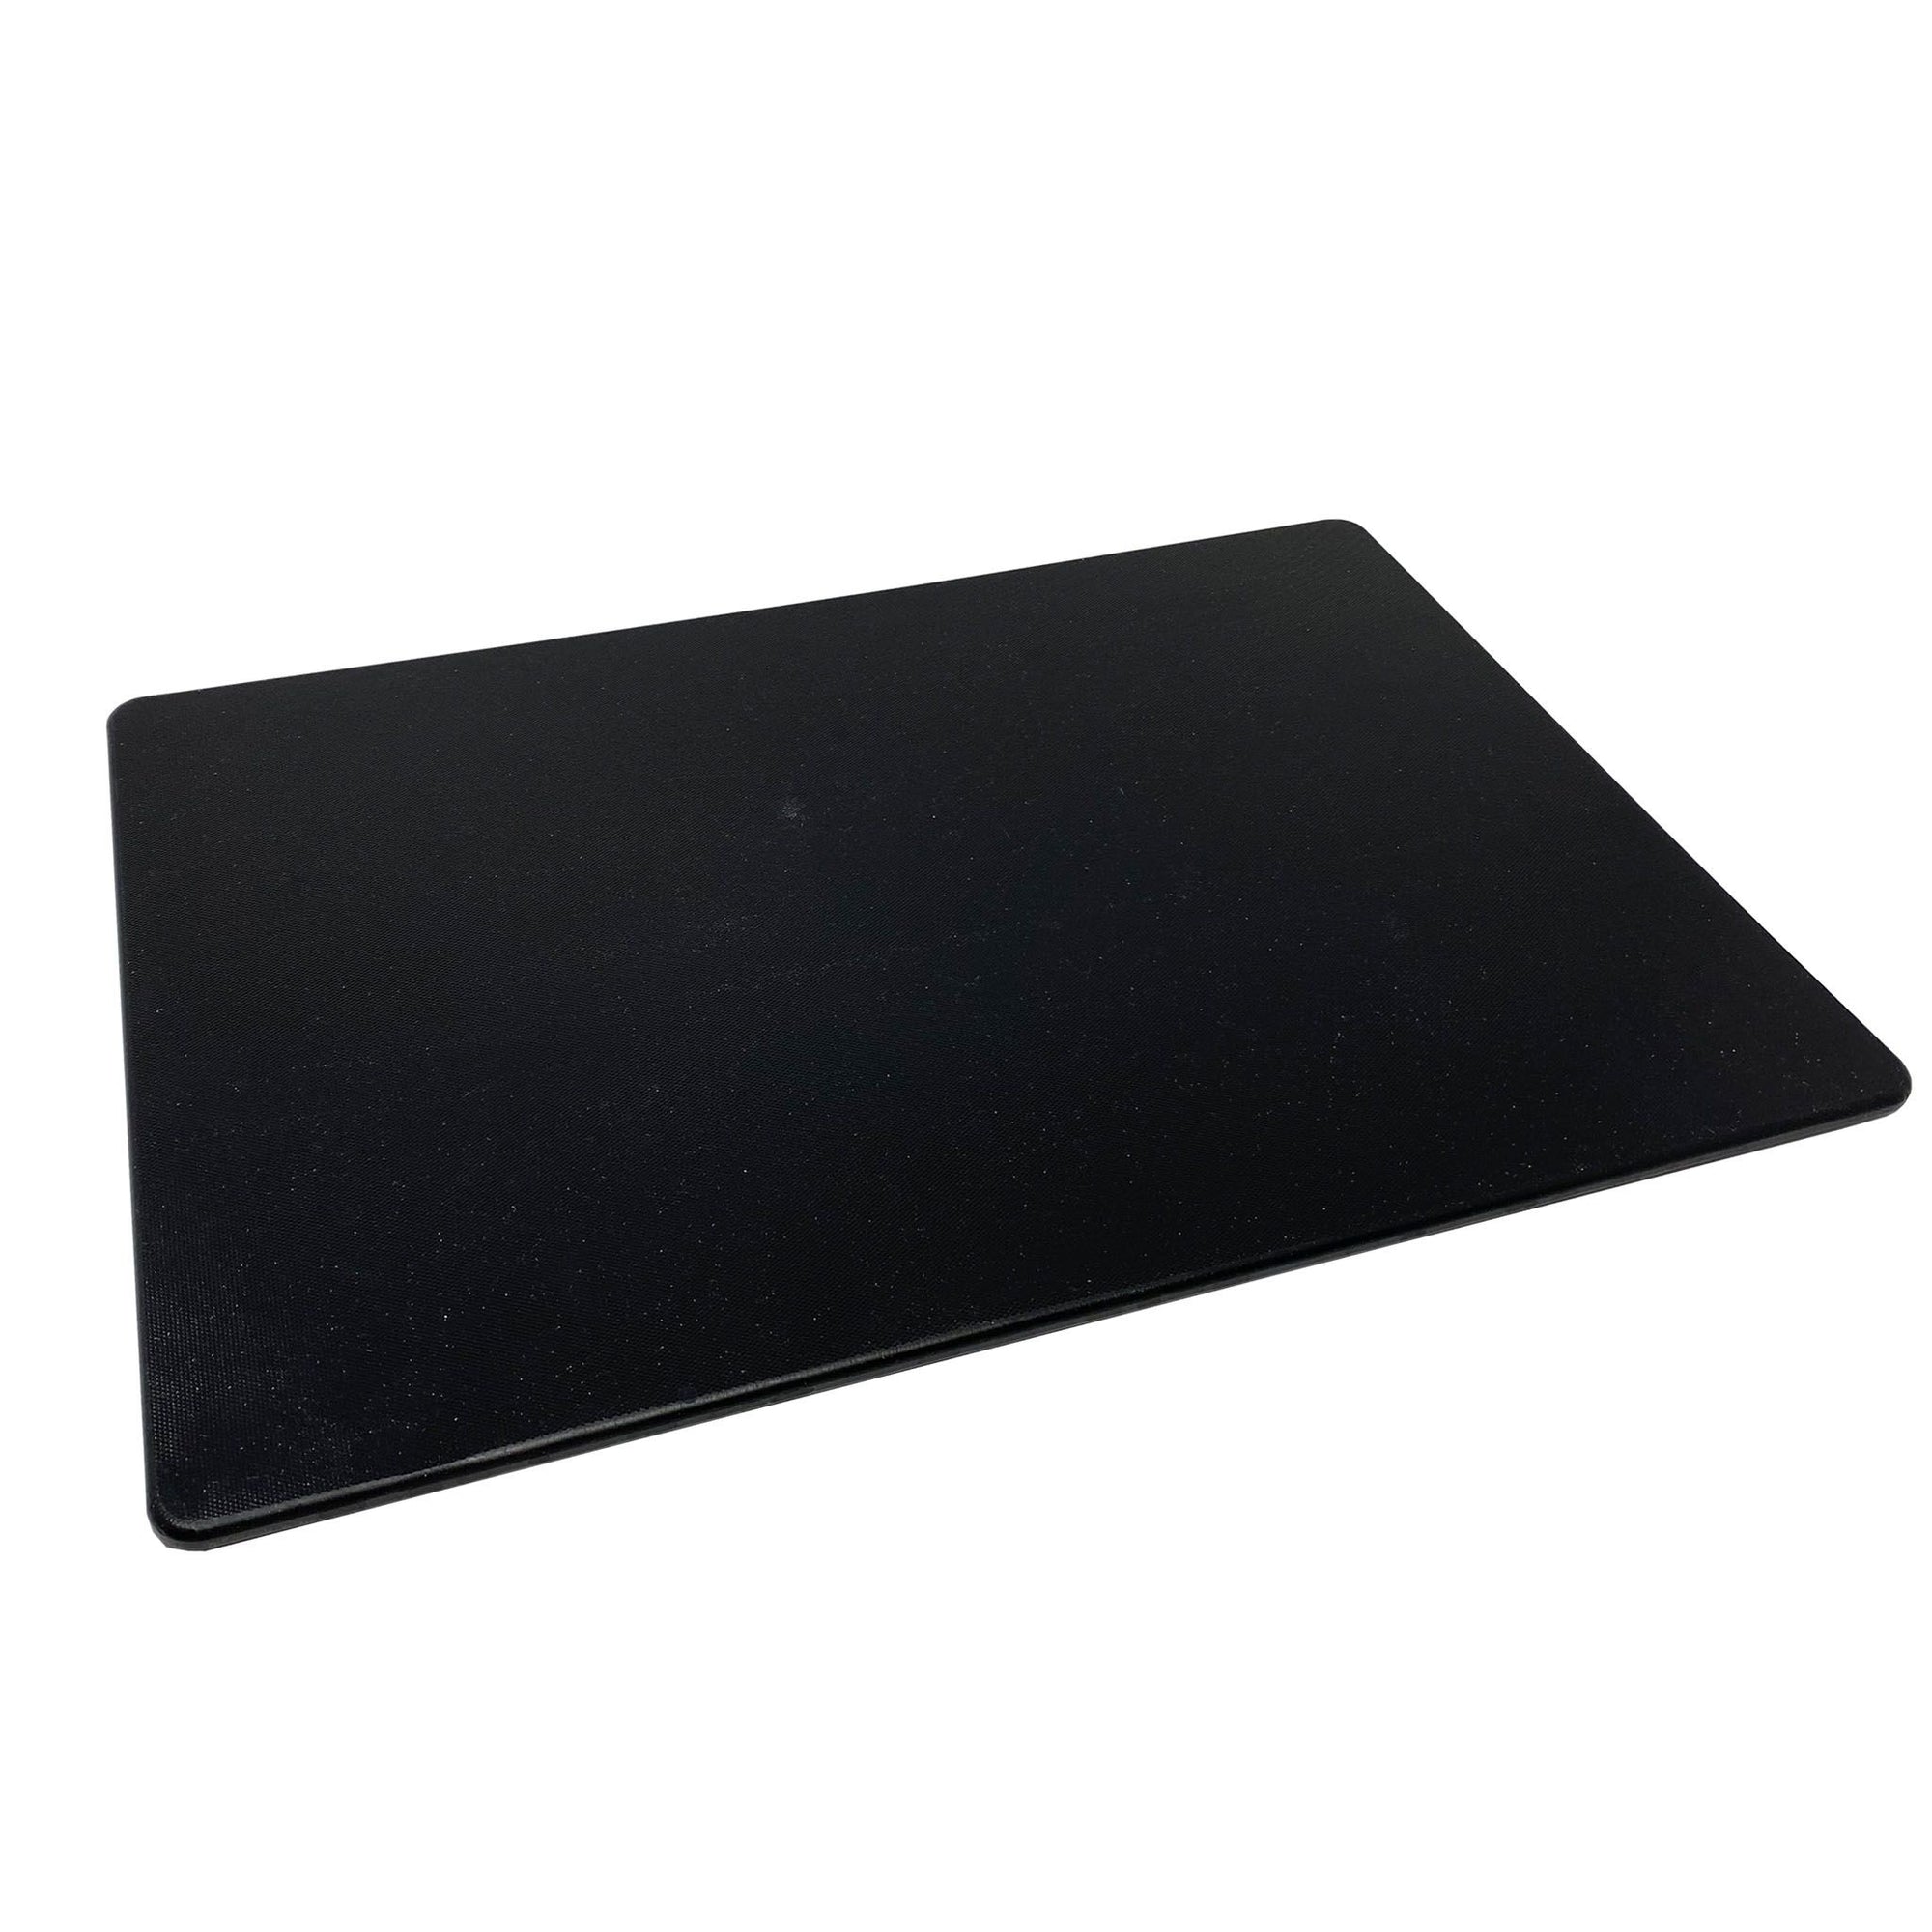 Conrad Shopping HDPE Plastic Cutting Board - Black